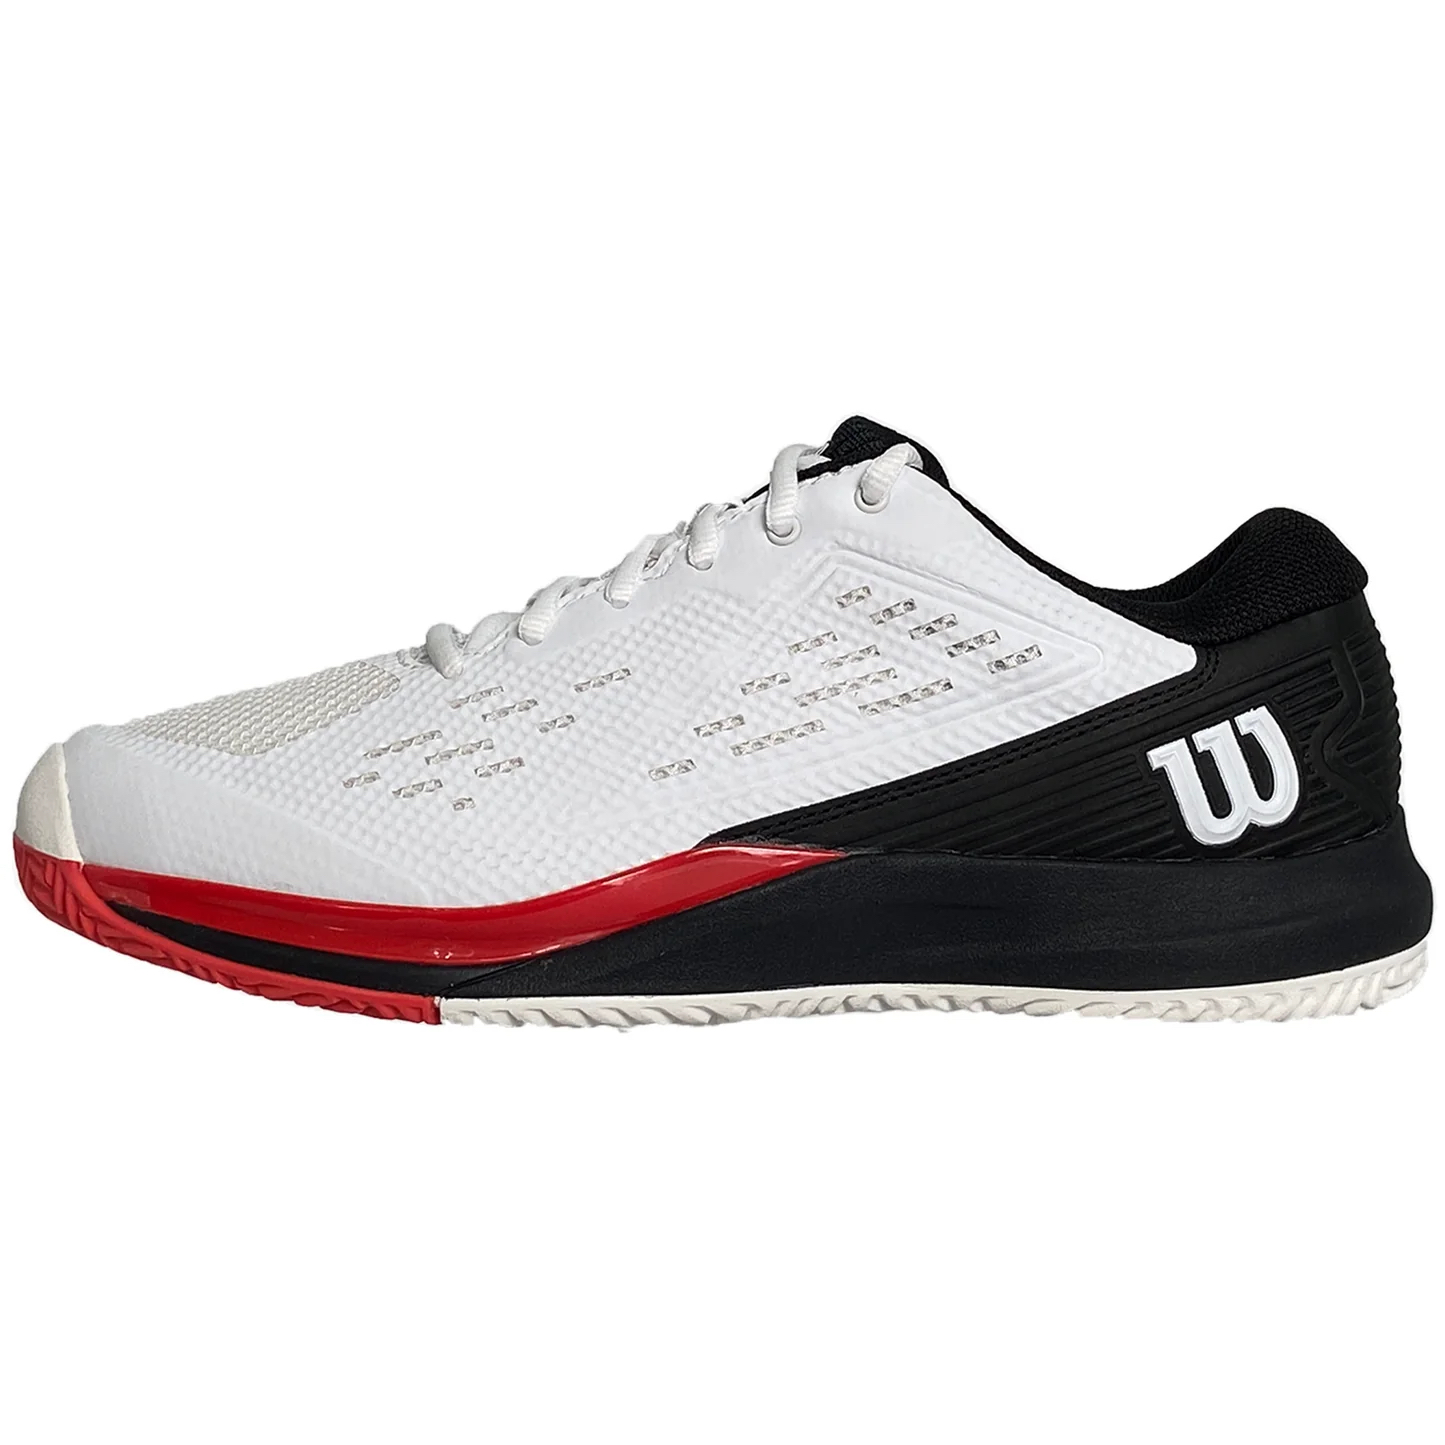 Wilson R`ush Pro ACE 专业网球鞋